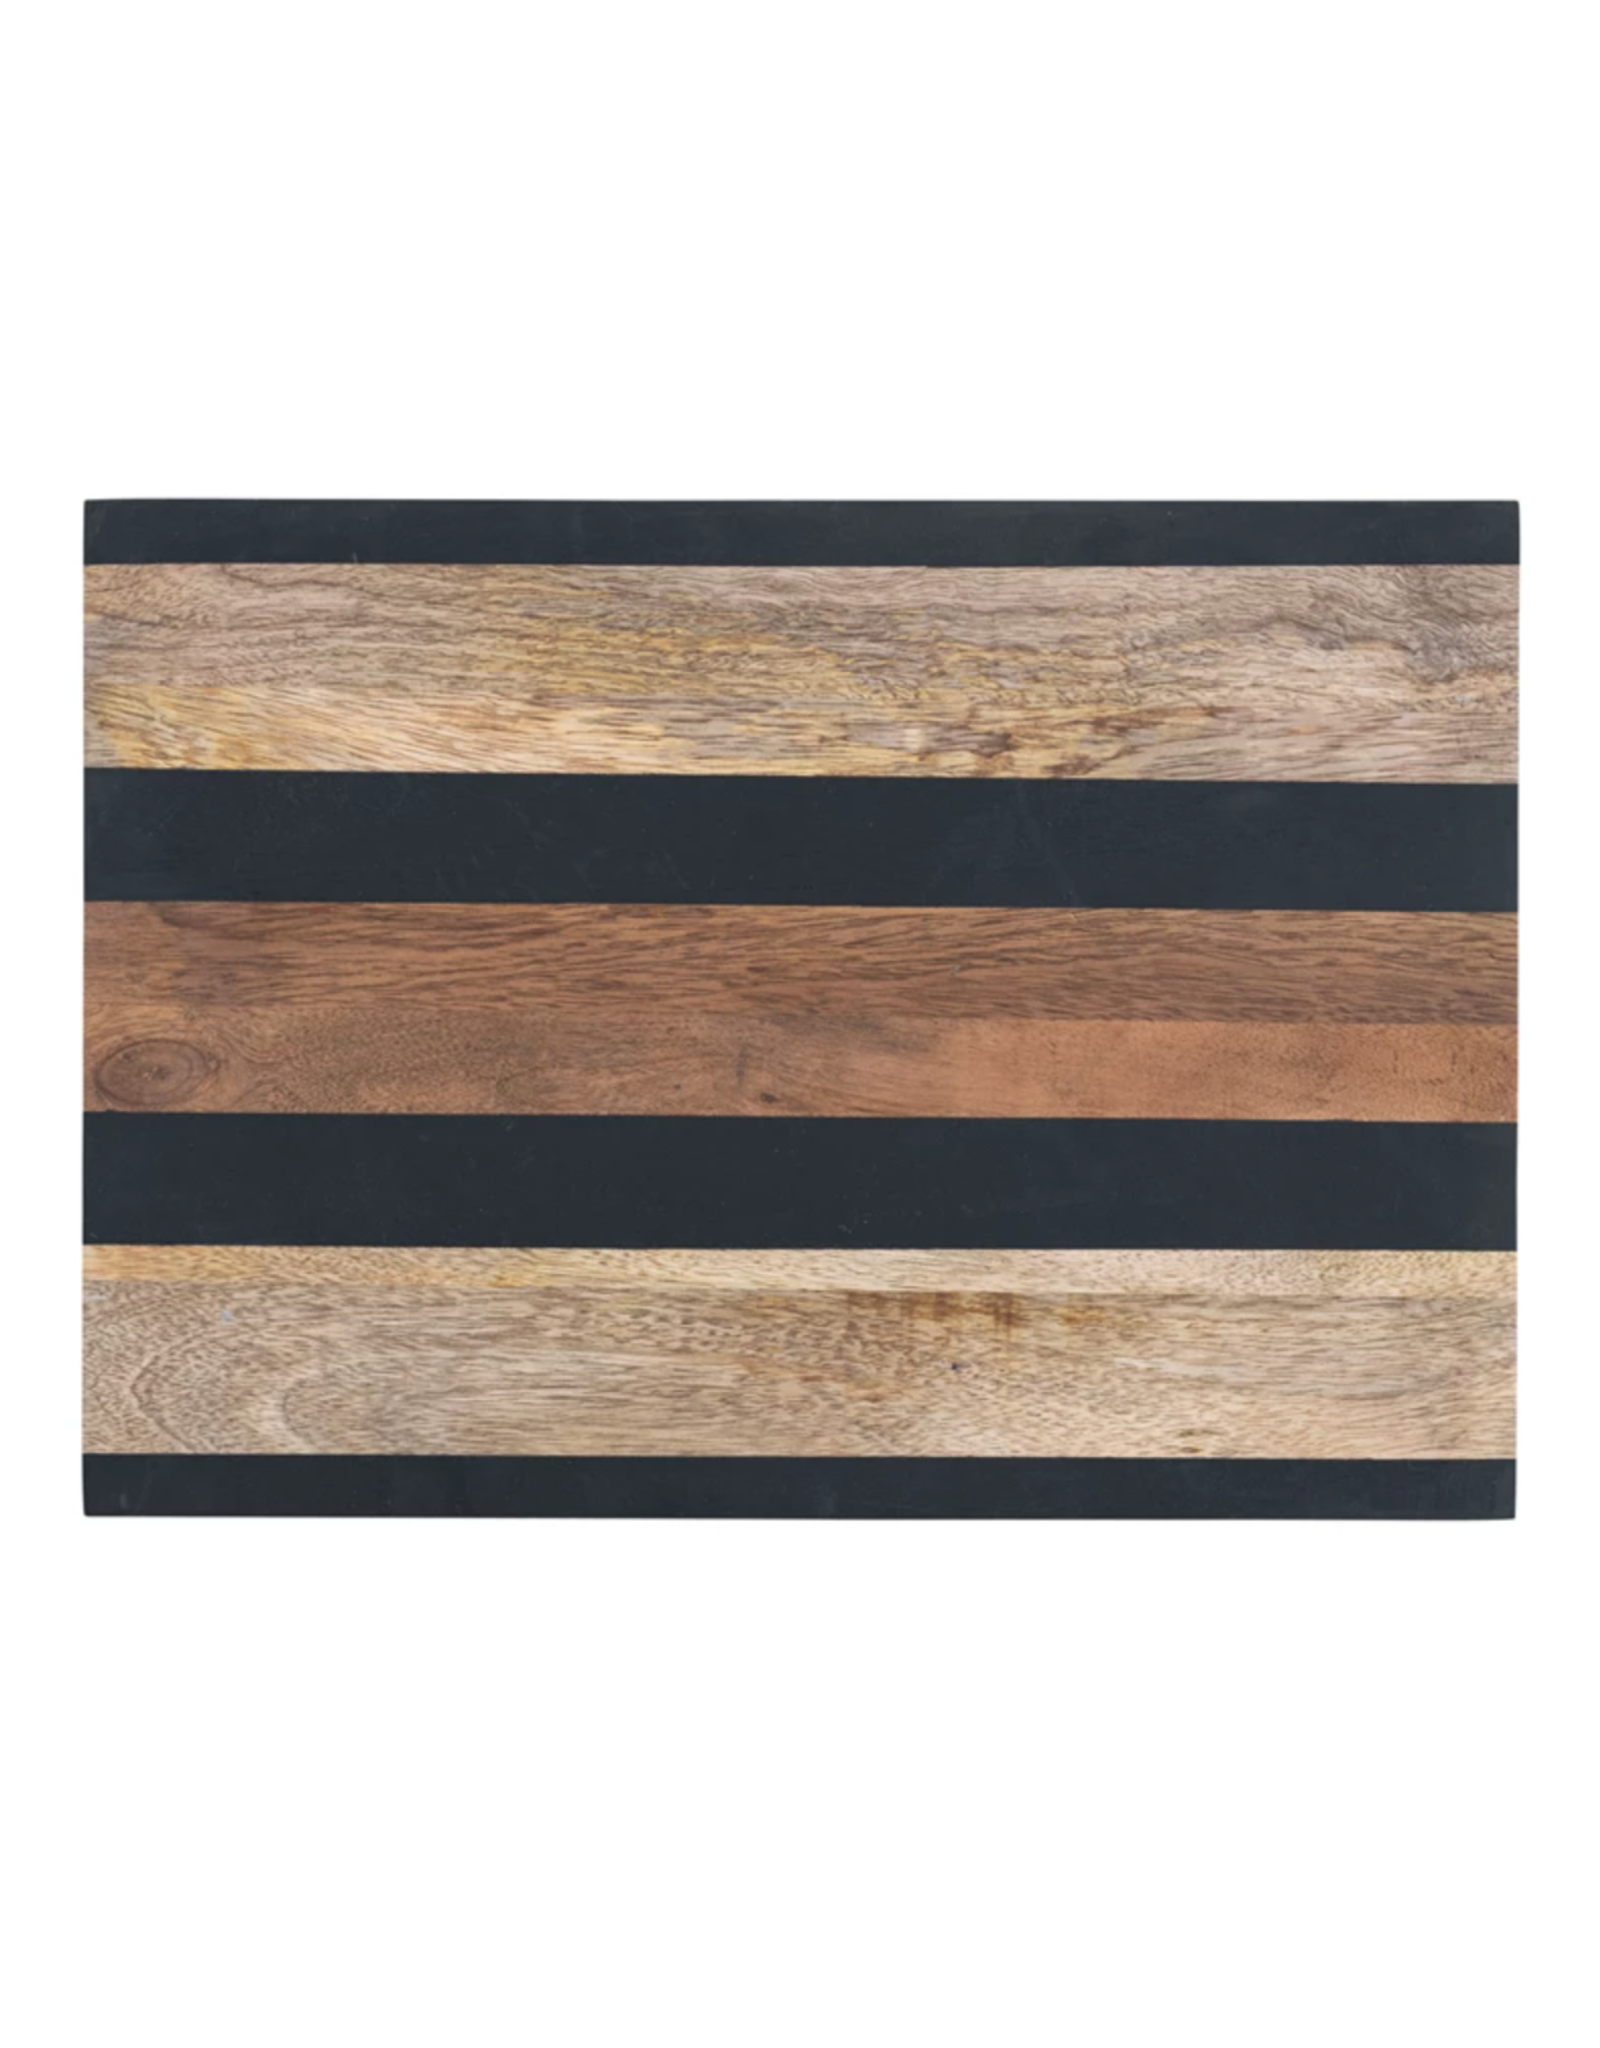 Bloomingville Mango Wood Cheese/Cutting Board w/ Stripes, Natural & Black